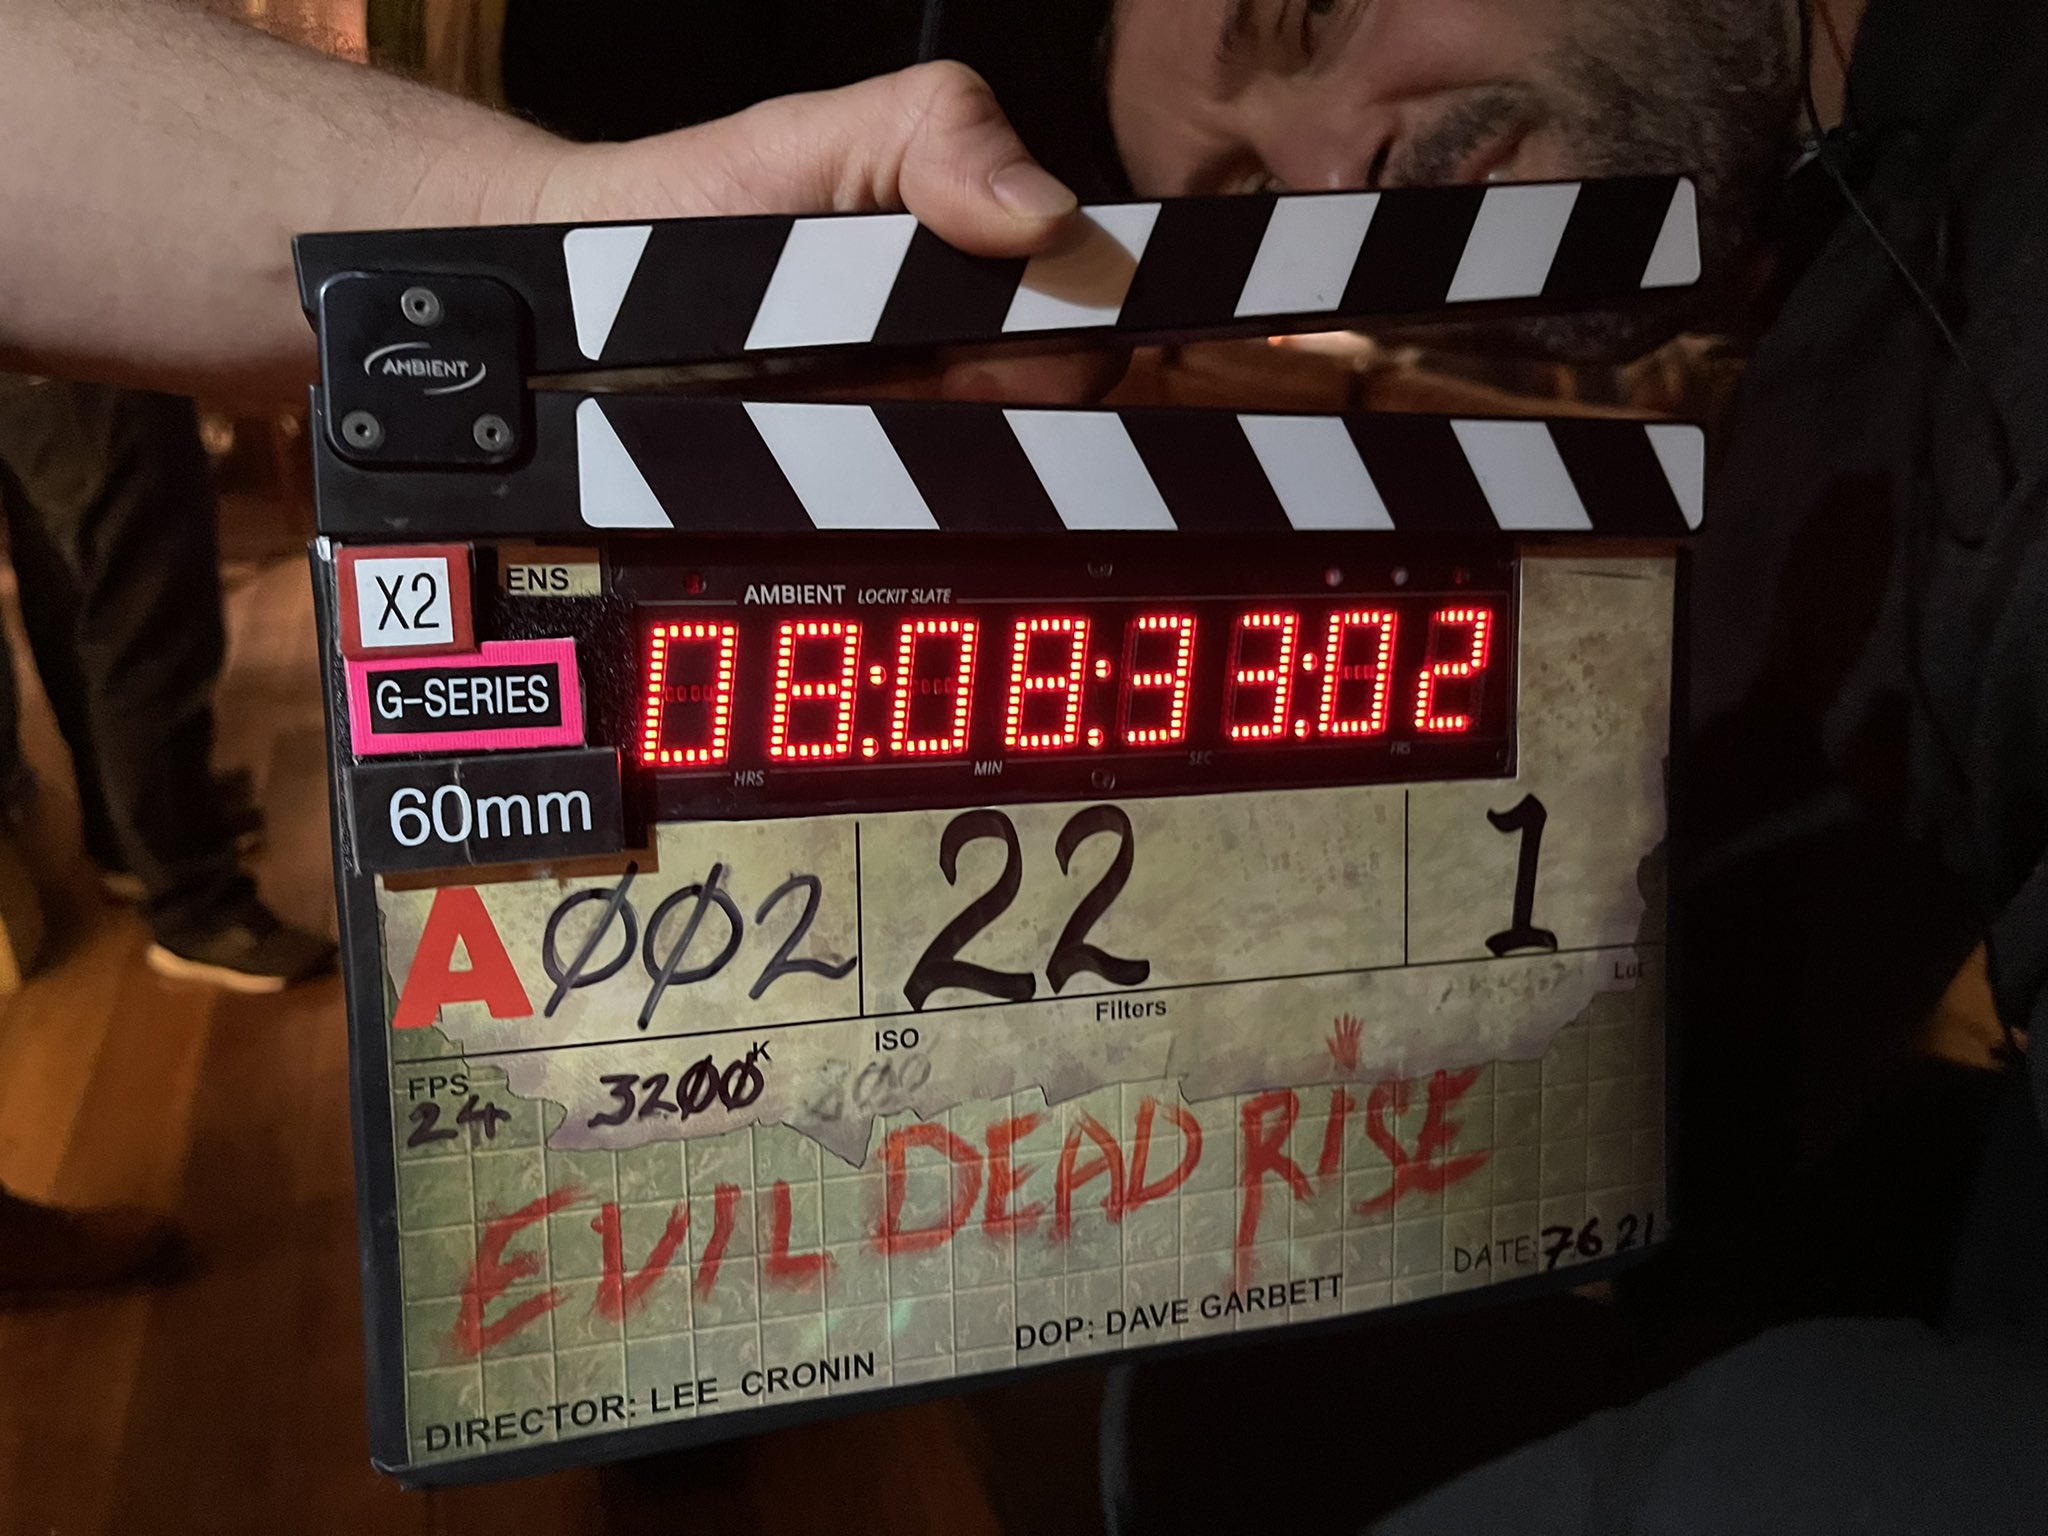 Evil Dead Rise Rumor Claims New Film Takes Place in a Skyscraper